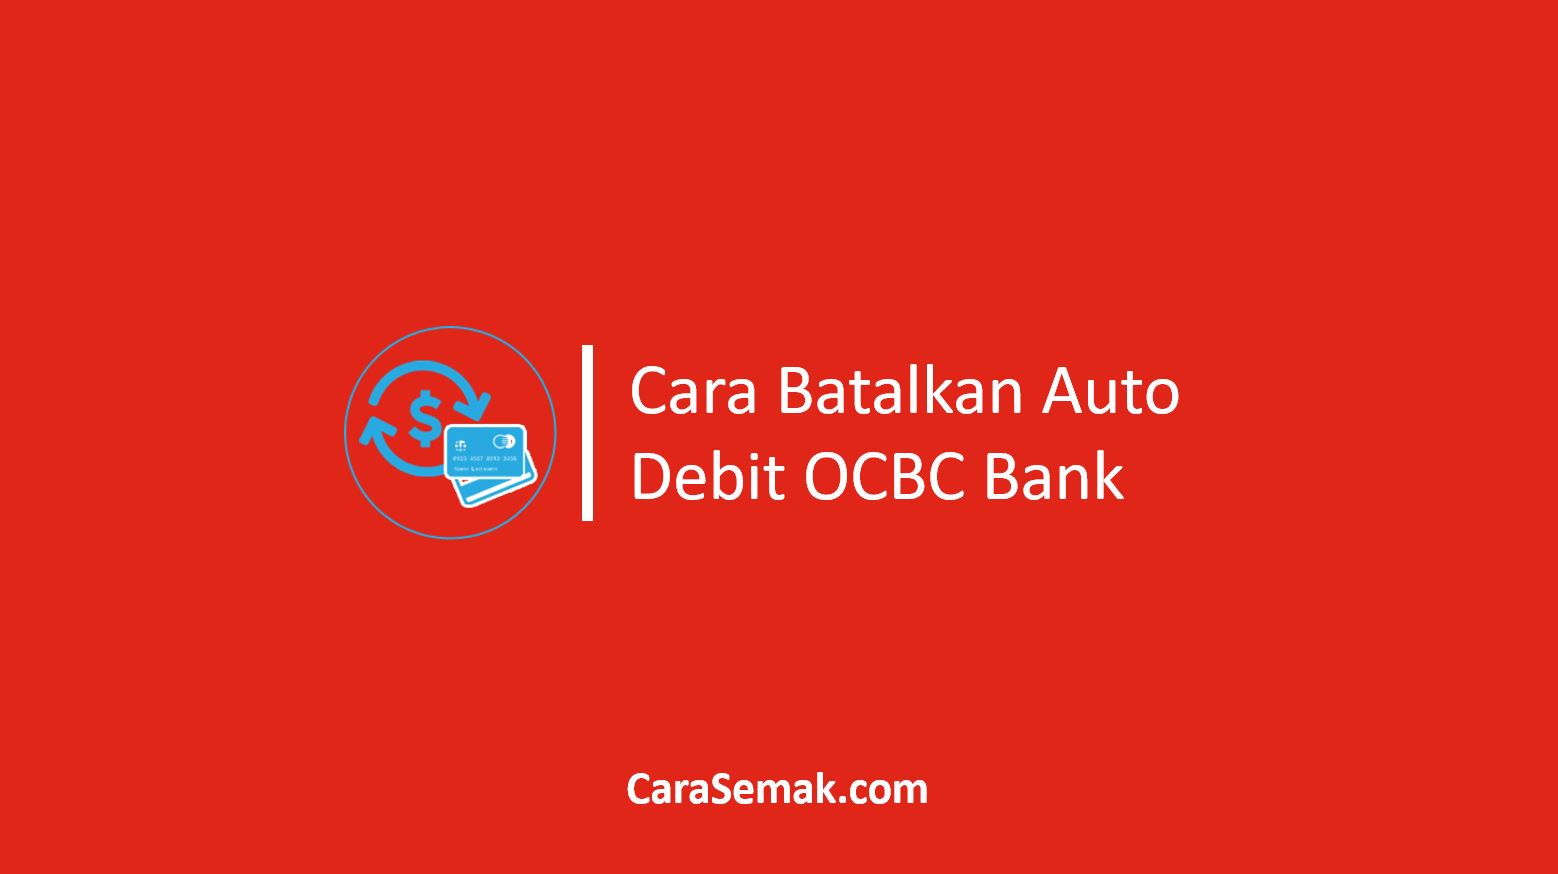 Cara Batalkan Auto Debit OCBC Bank